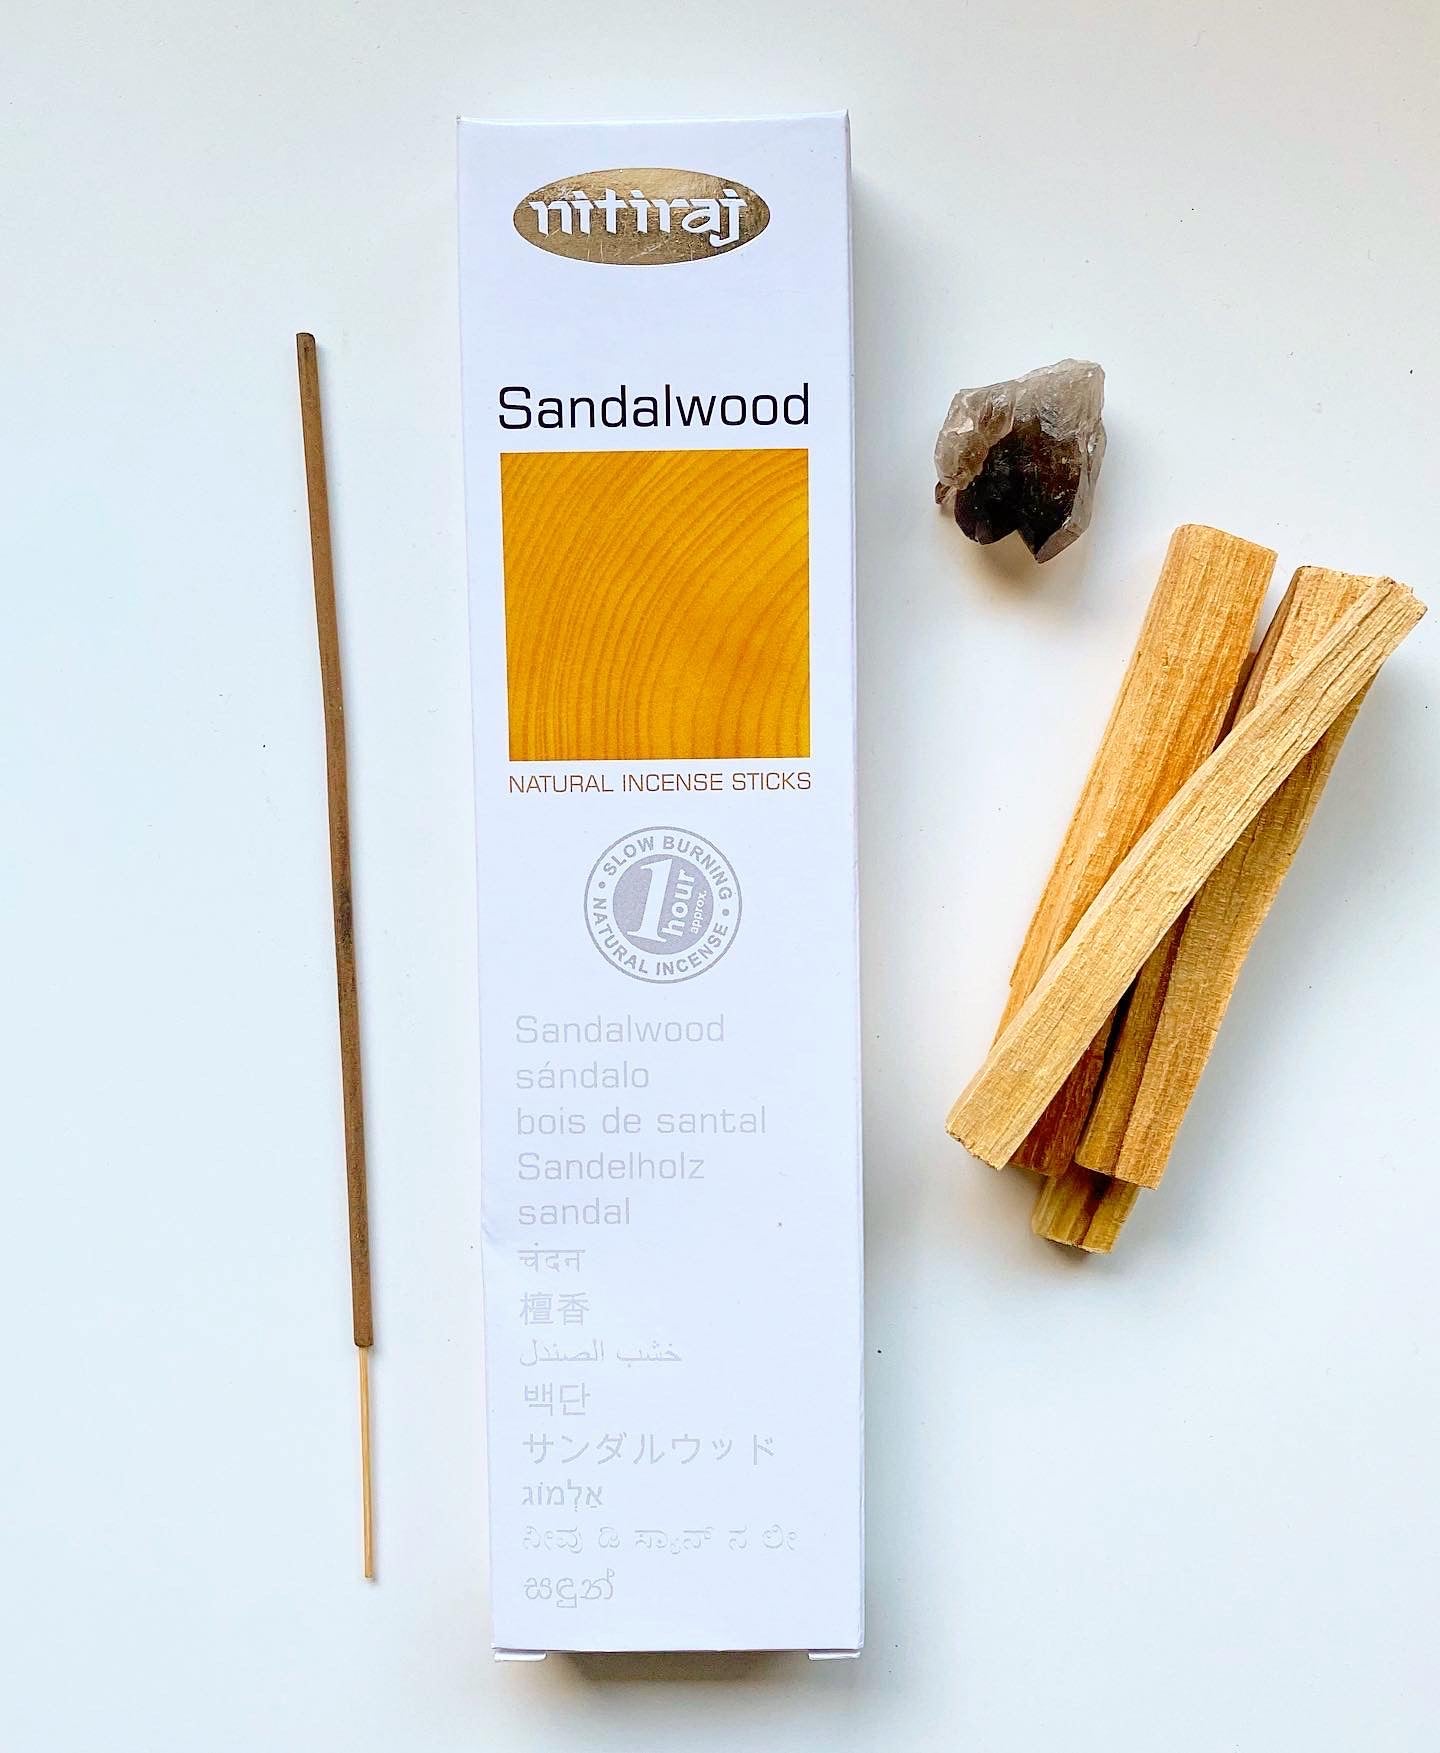 Nitiraj Platinum - Sandalwood - Natural Incense Sticks